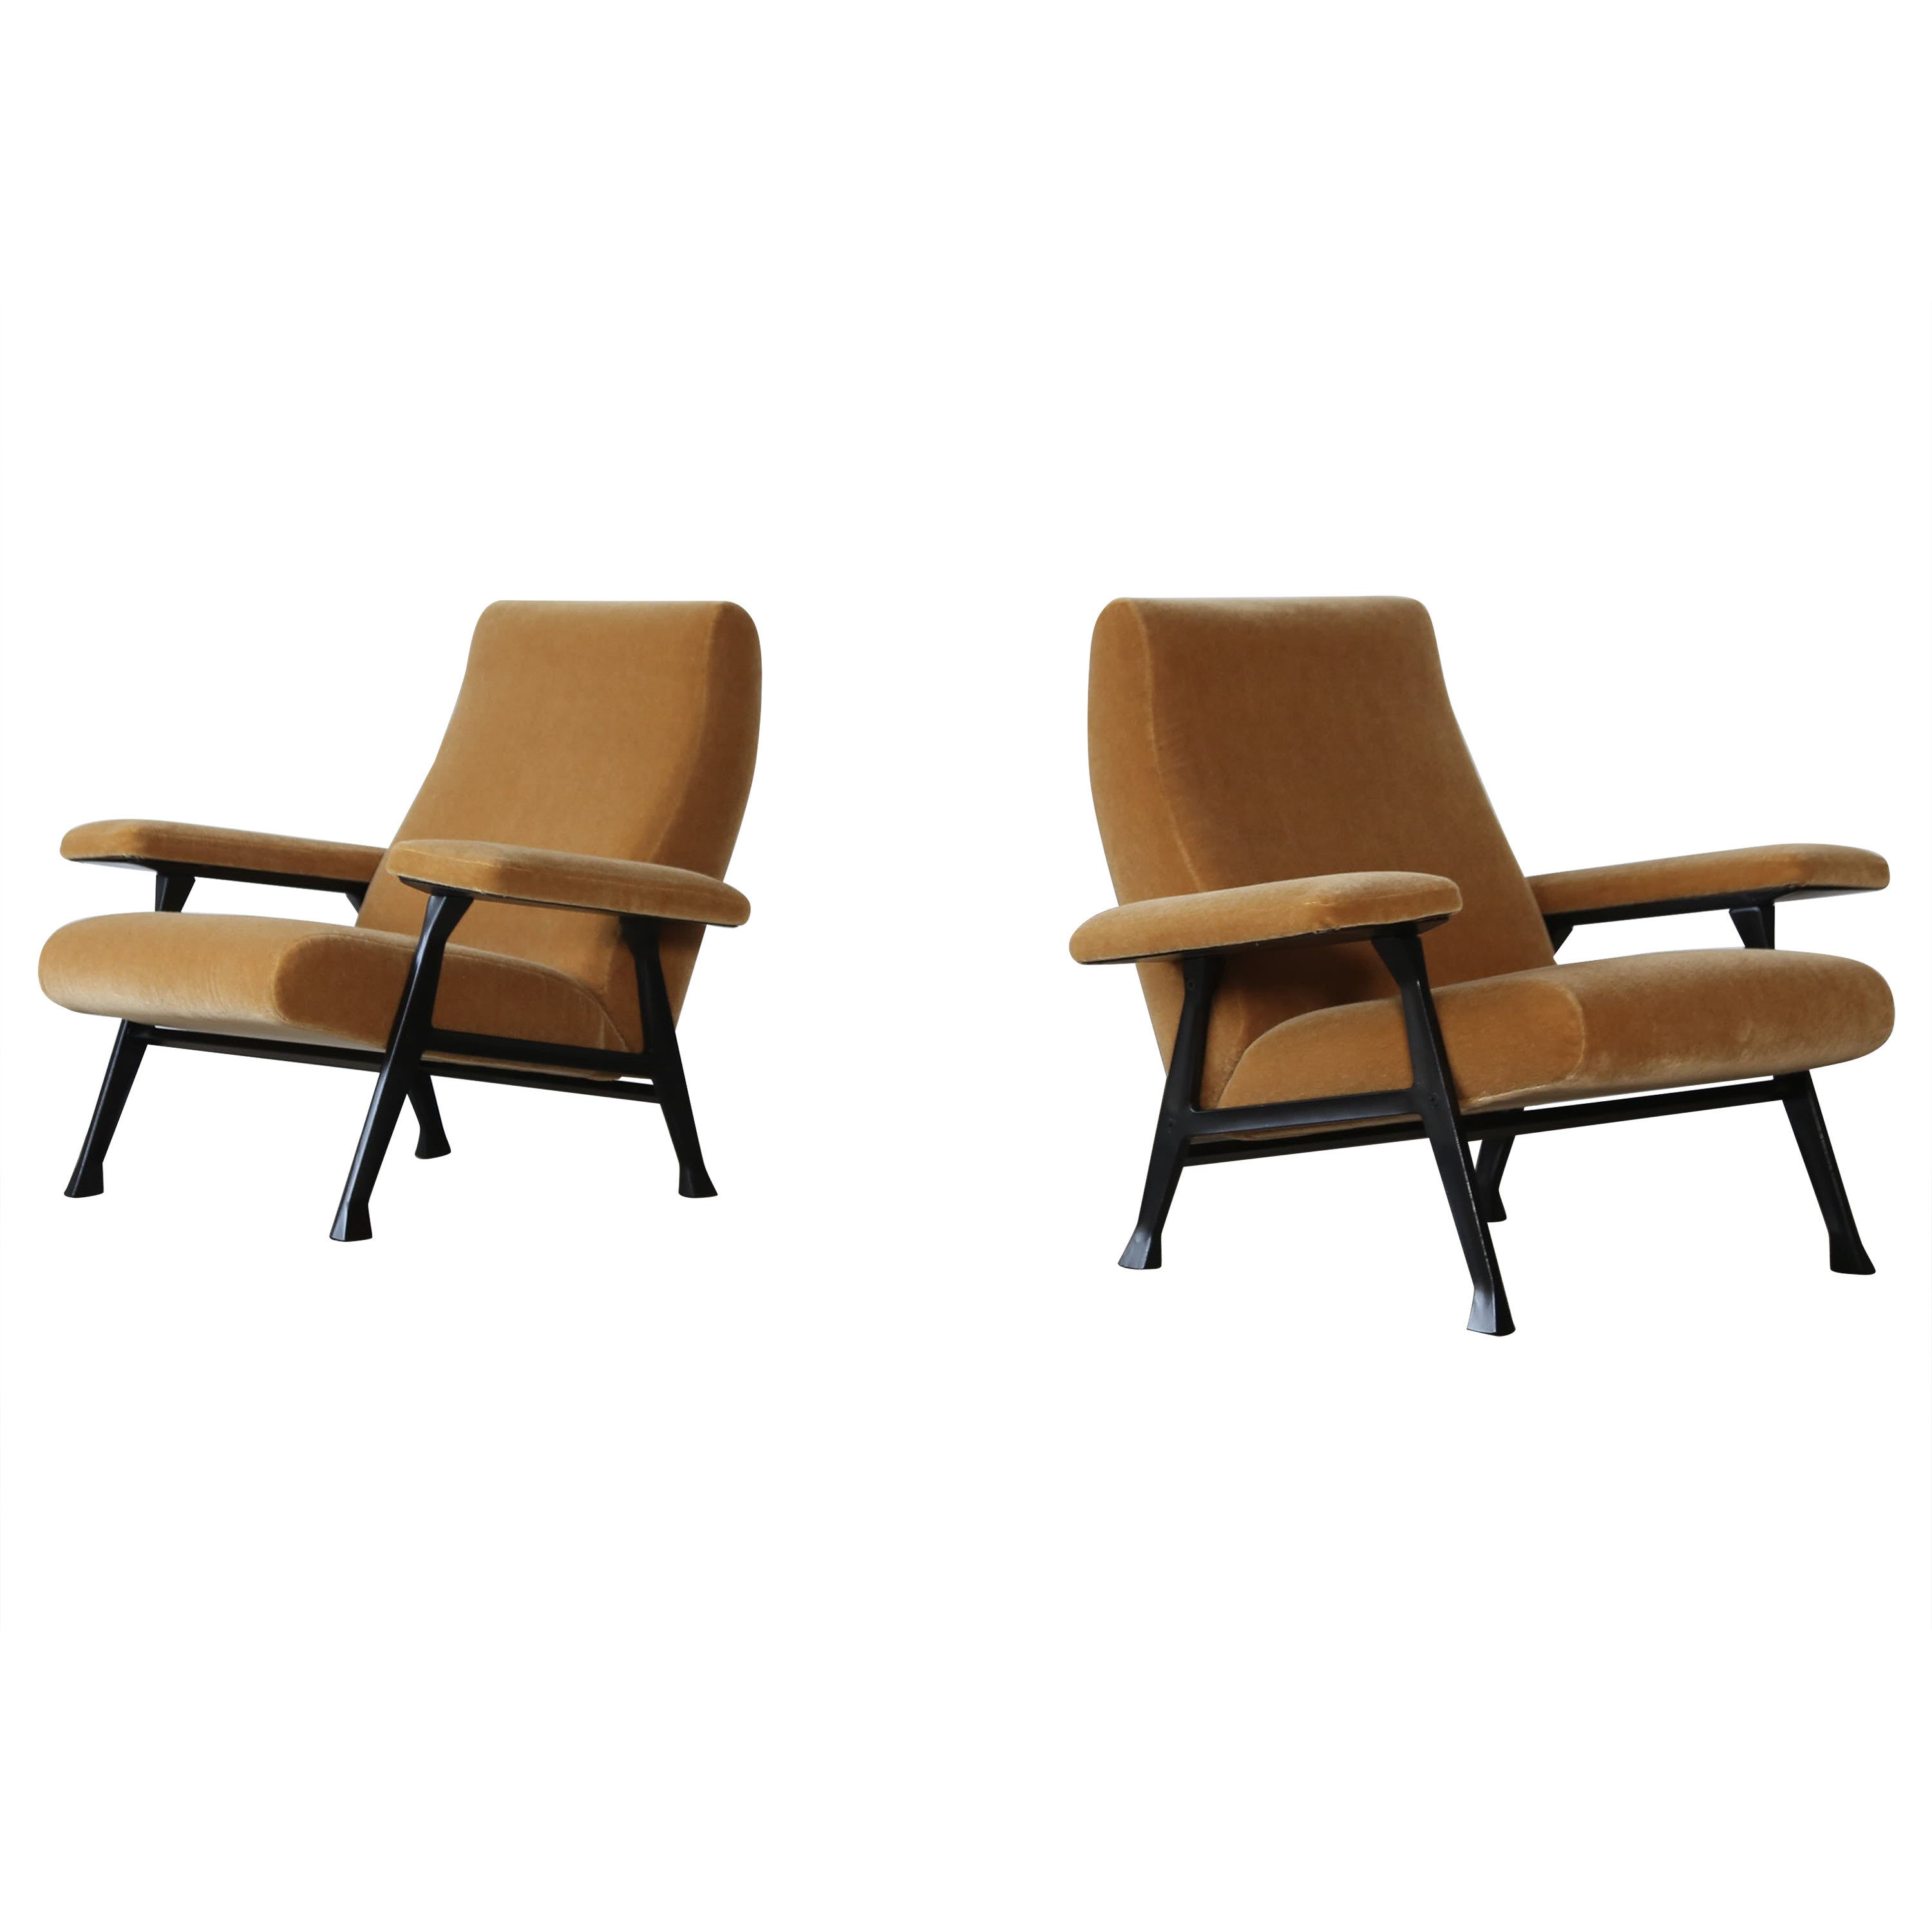 Seltenes Paar authentischer Roberto Menghi Hall Stühle aus den 1950ern, Italien, New Pure Mohair